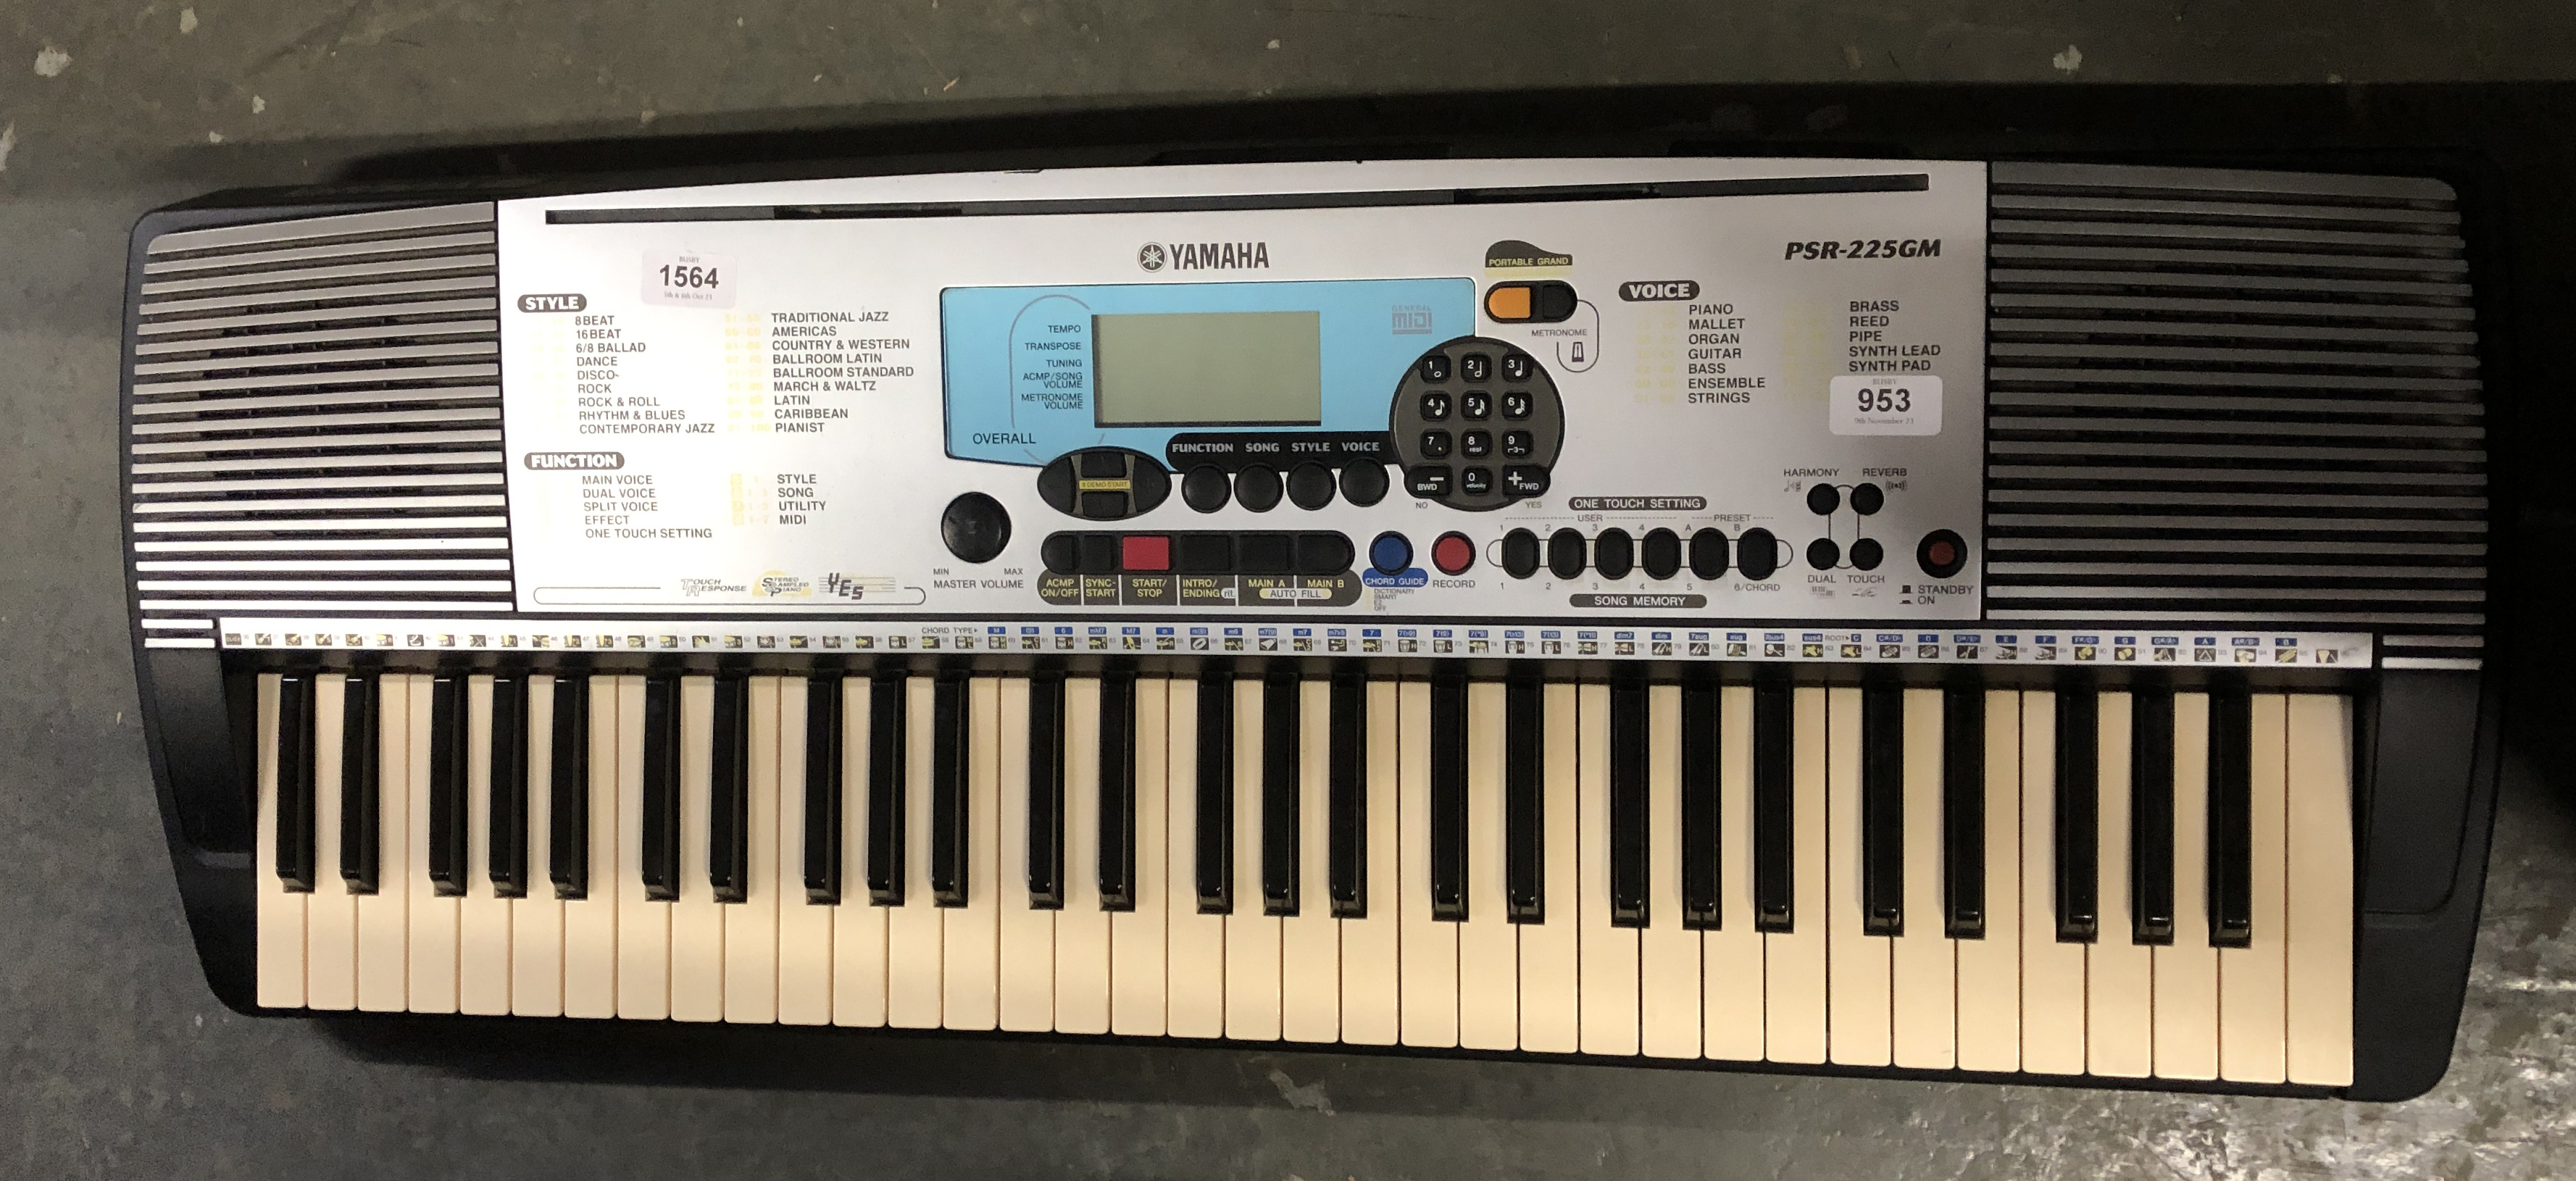 A Yamaha PSR-225 GM keyboard with stand